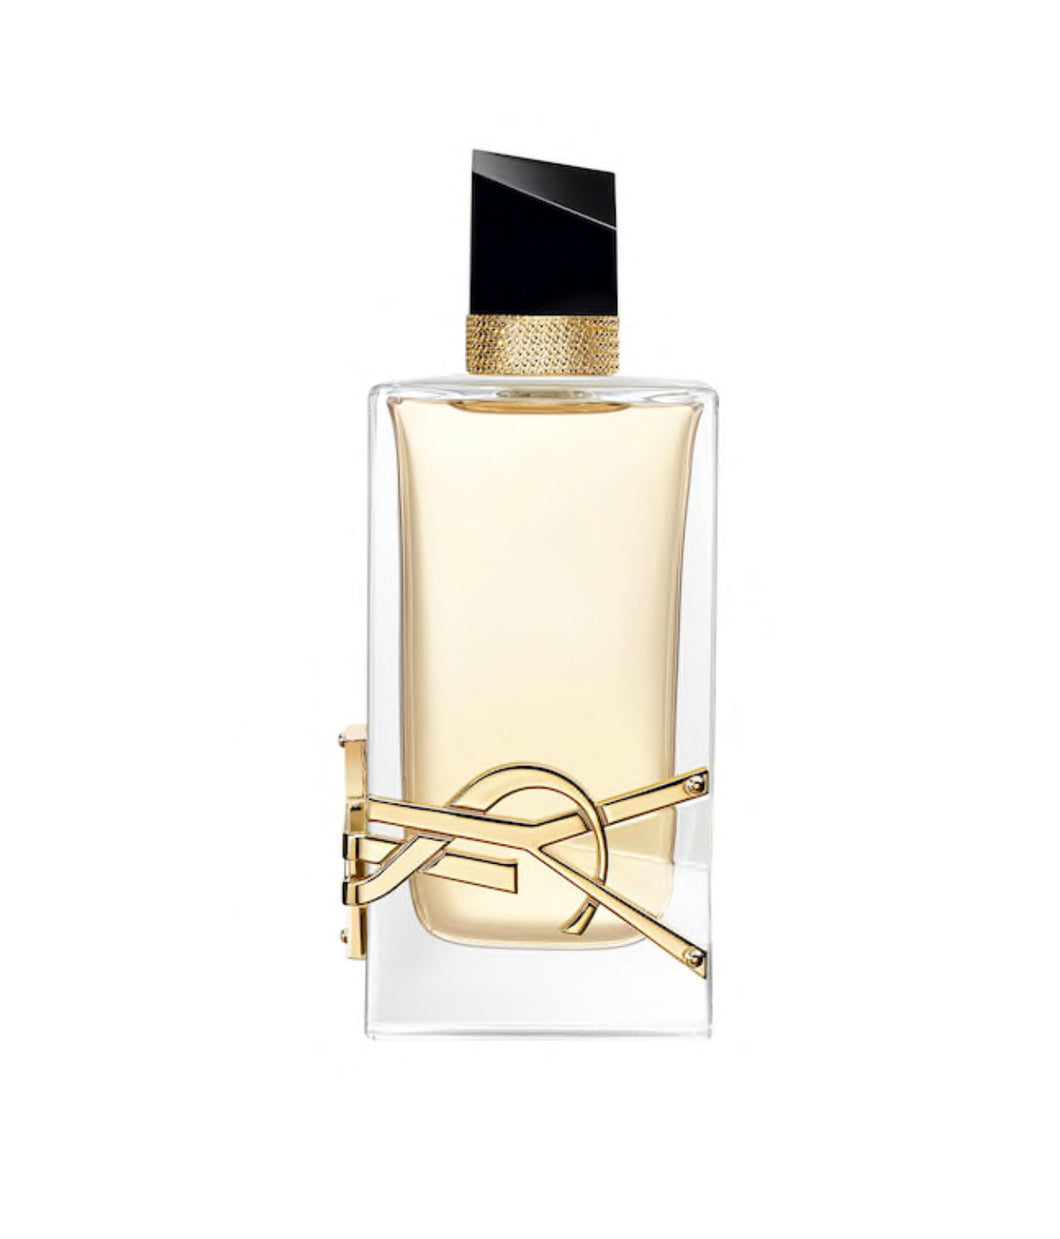 Free Perfume by Yves Saint Laurent